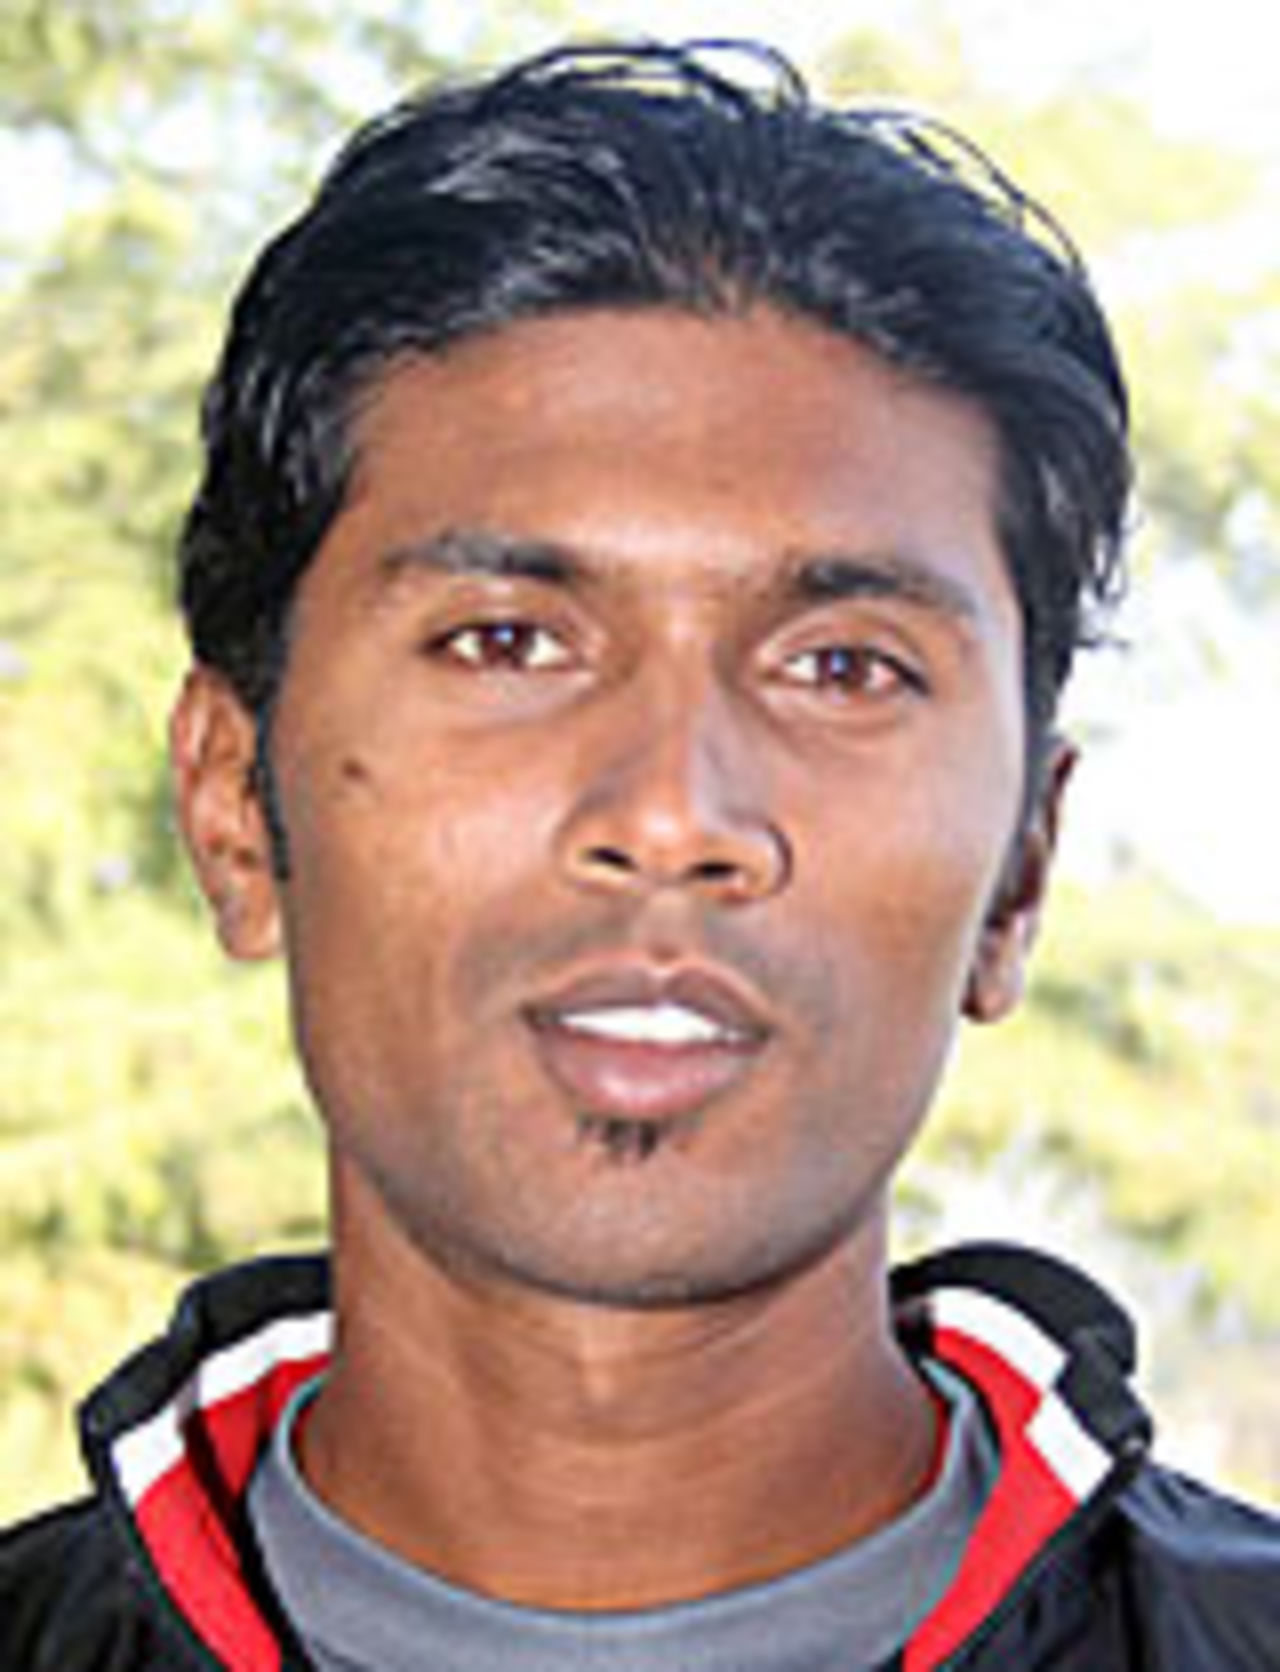 Dhiraj Singh, player portrait, December 2009